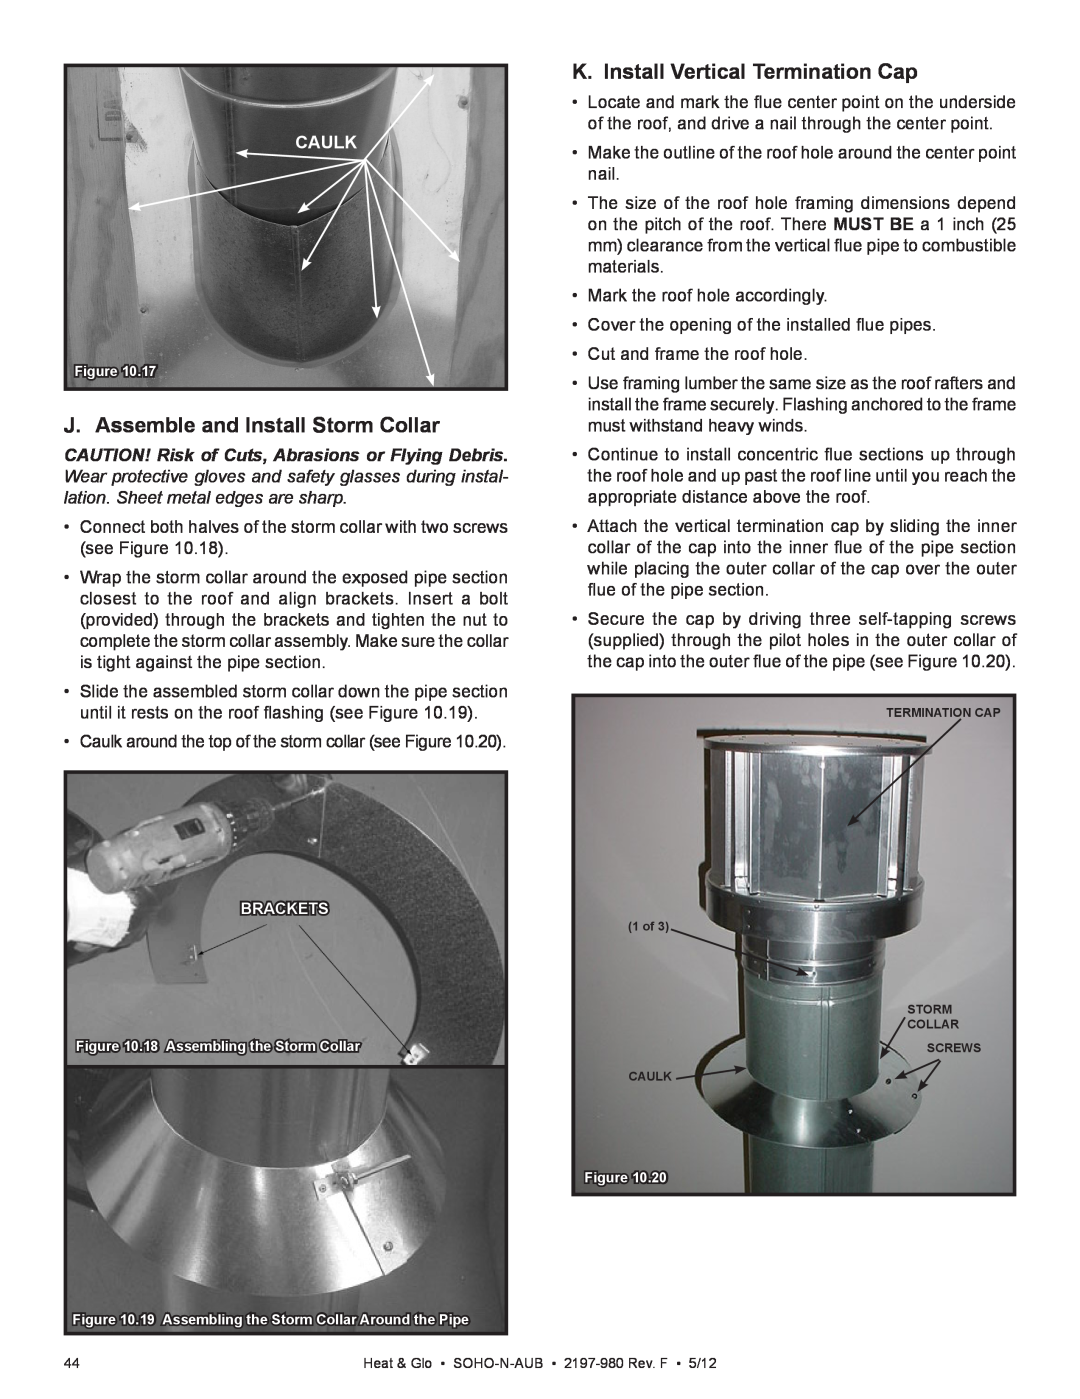 Heat & Glo LifeStyle 2197-980 owner manual J. Assemble and Install Storm Collar, K. Install Vertical Termination Cap, Caulk 